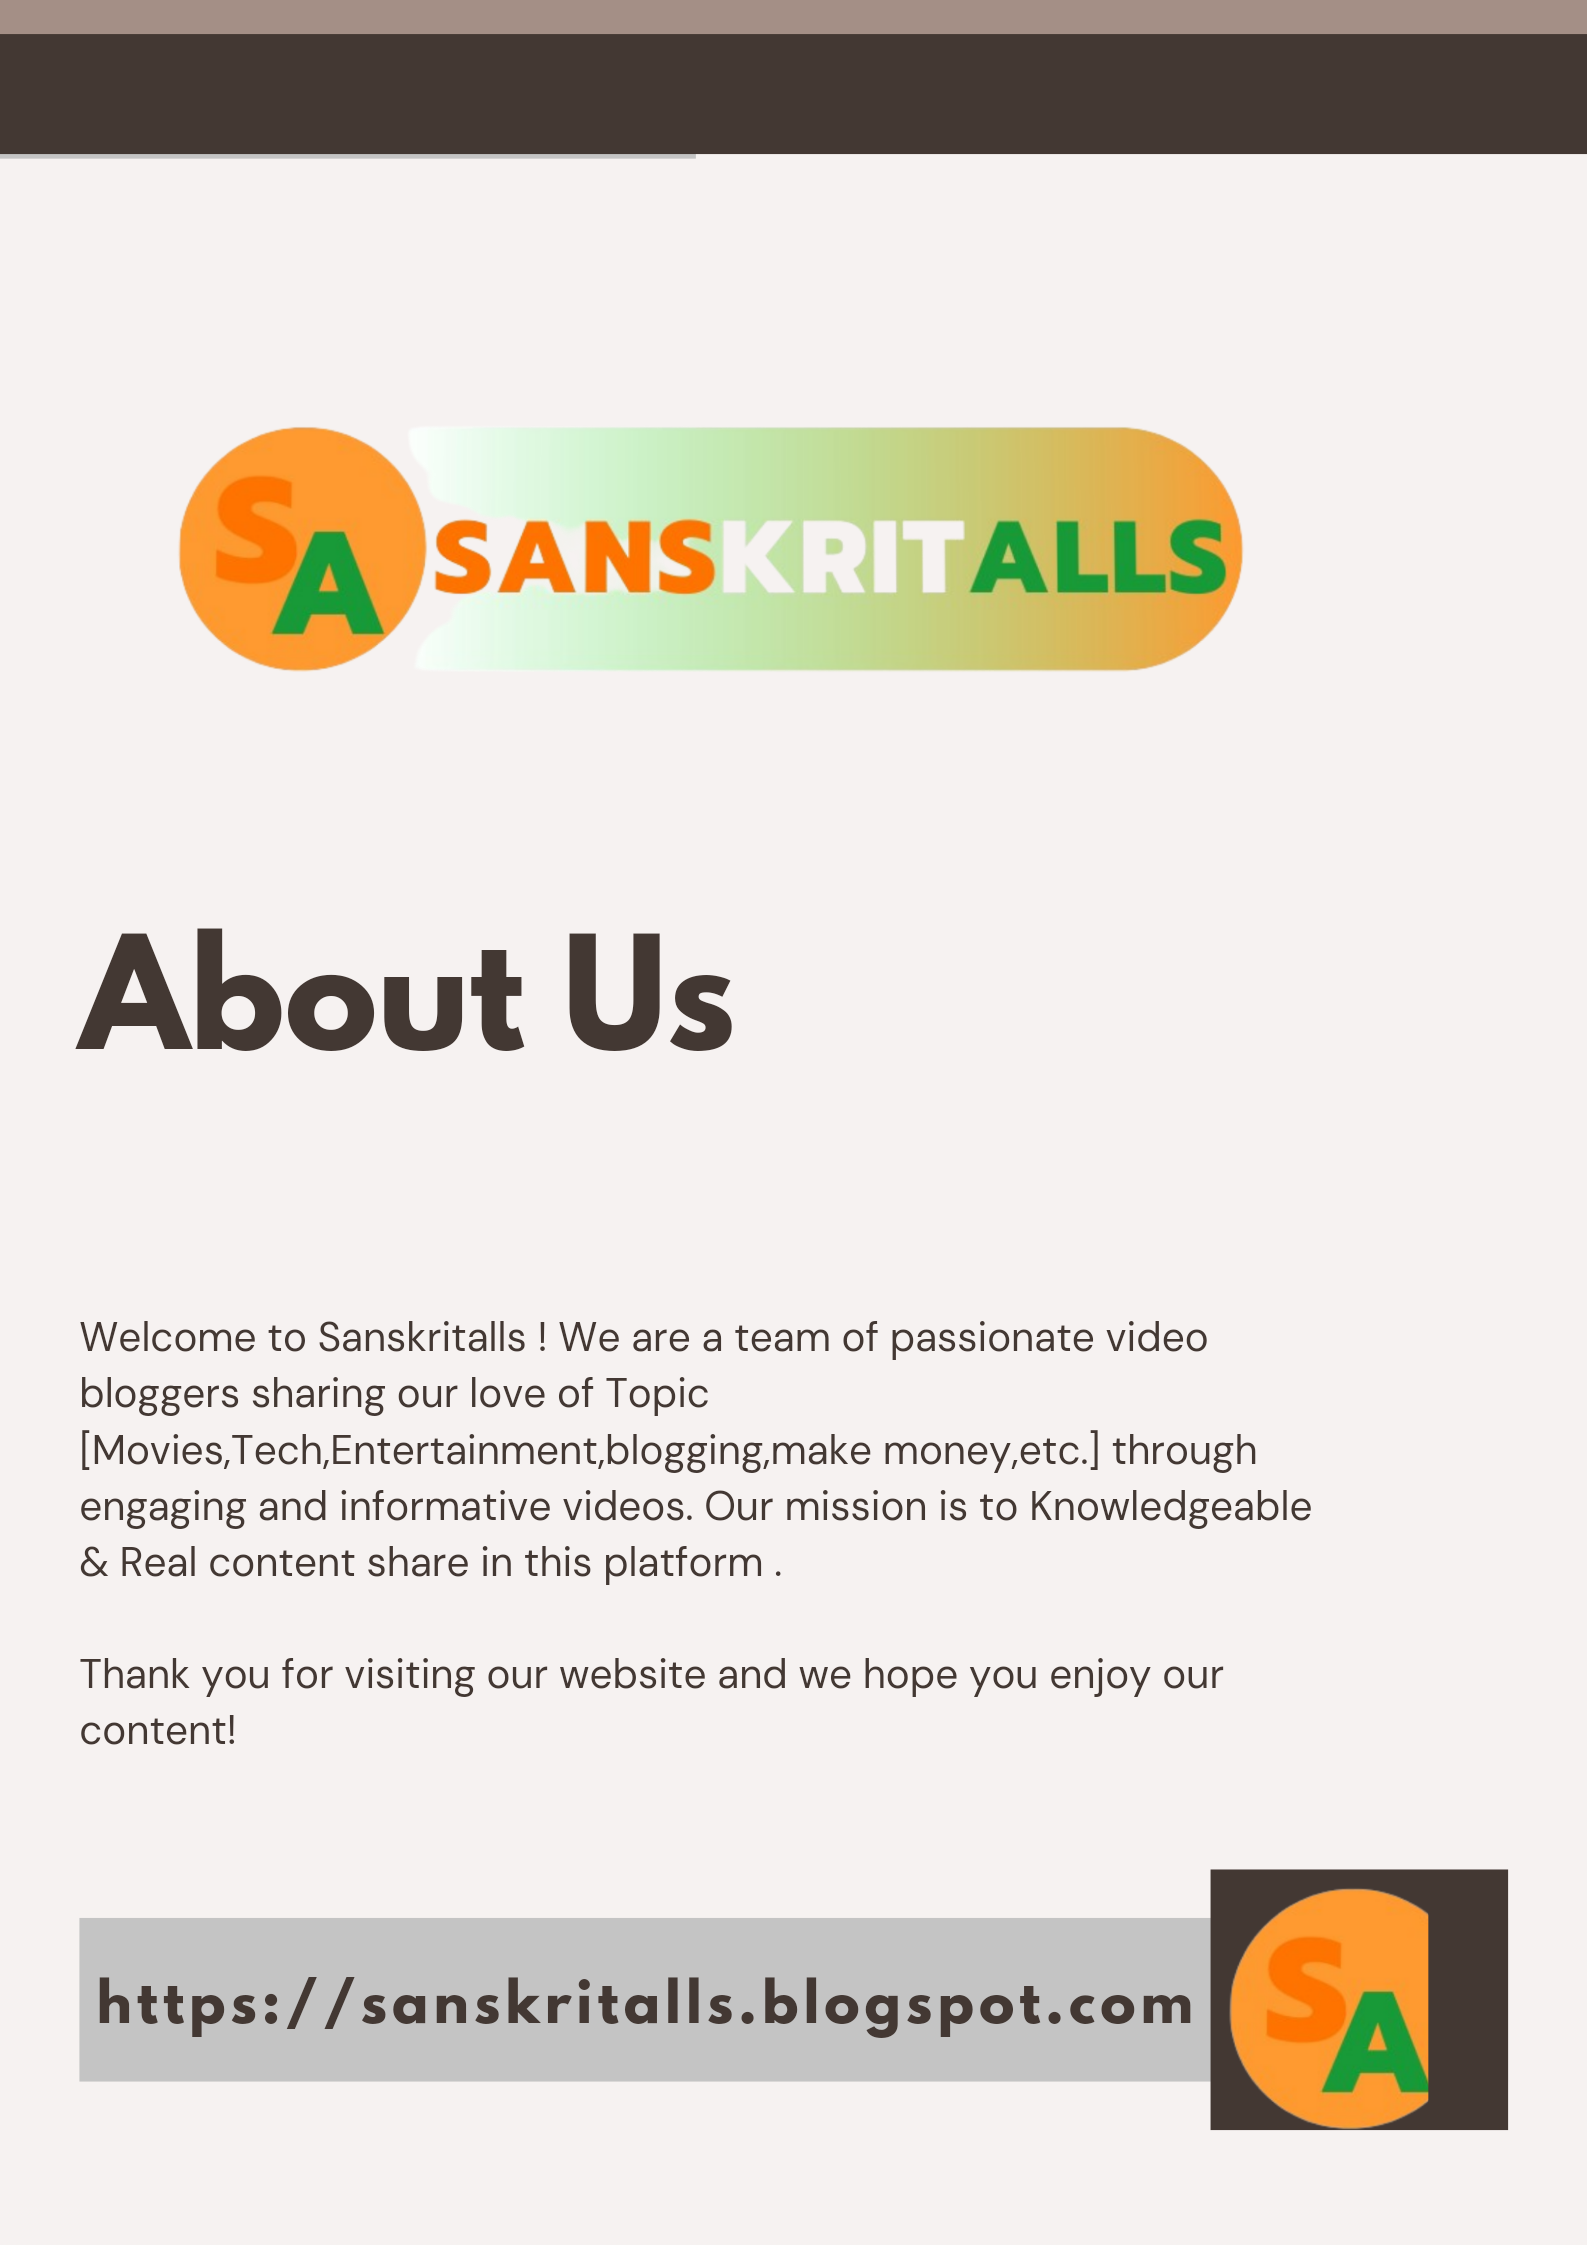 Sanskritalls about us